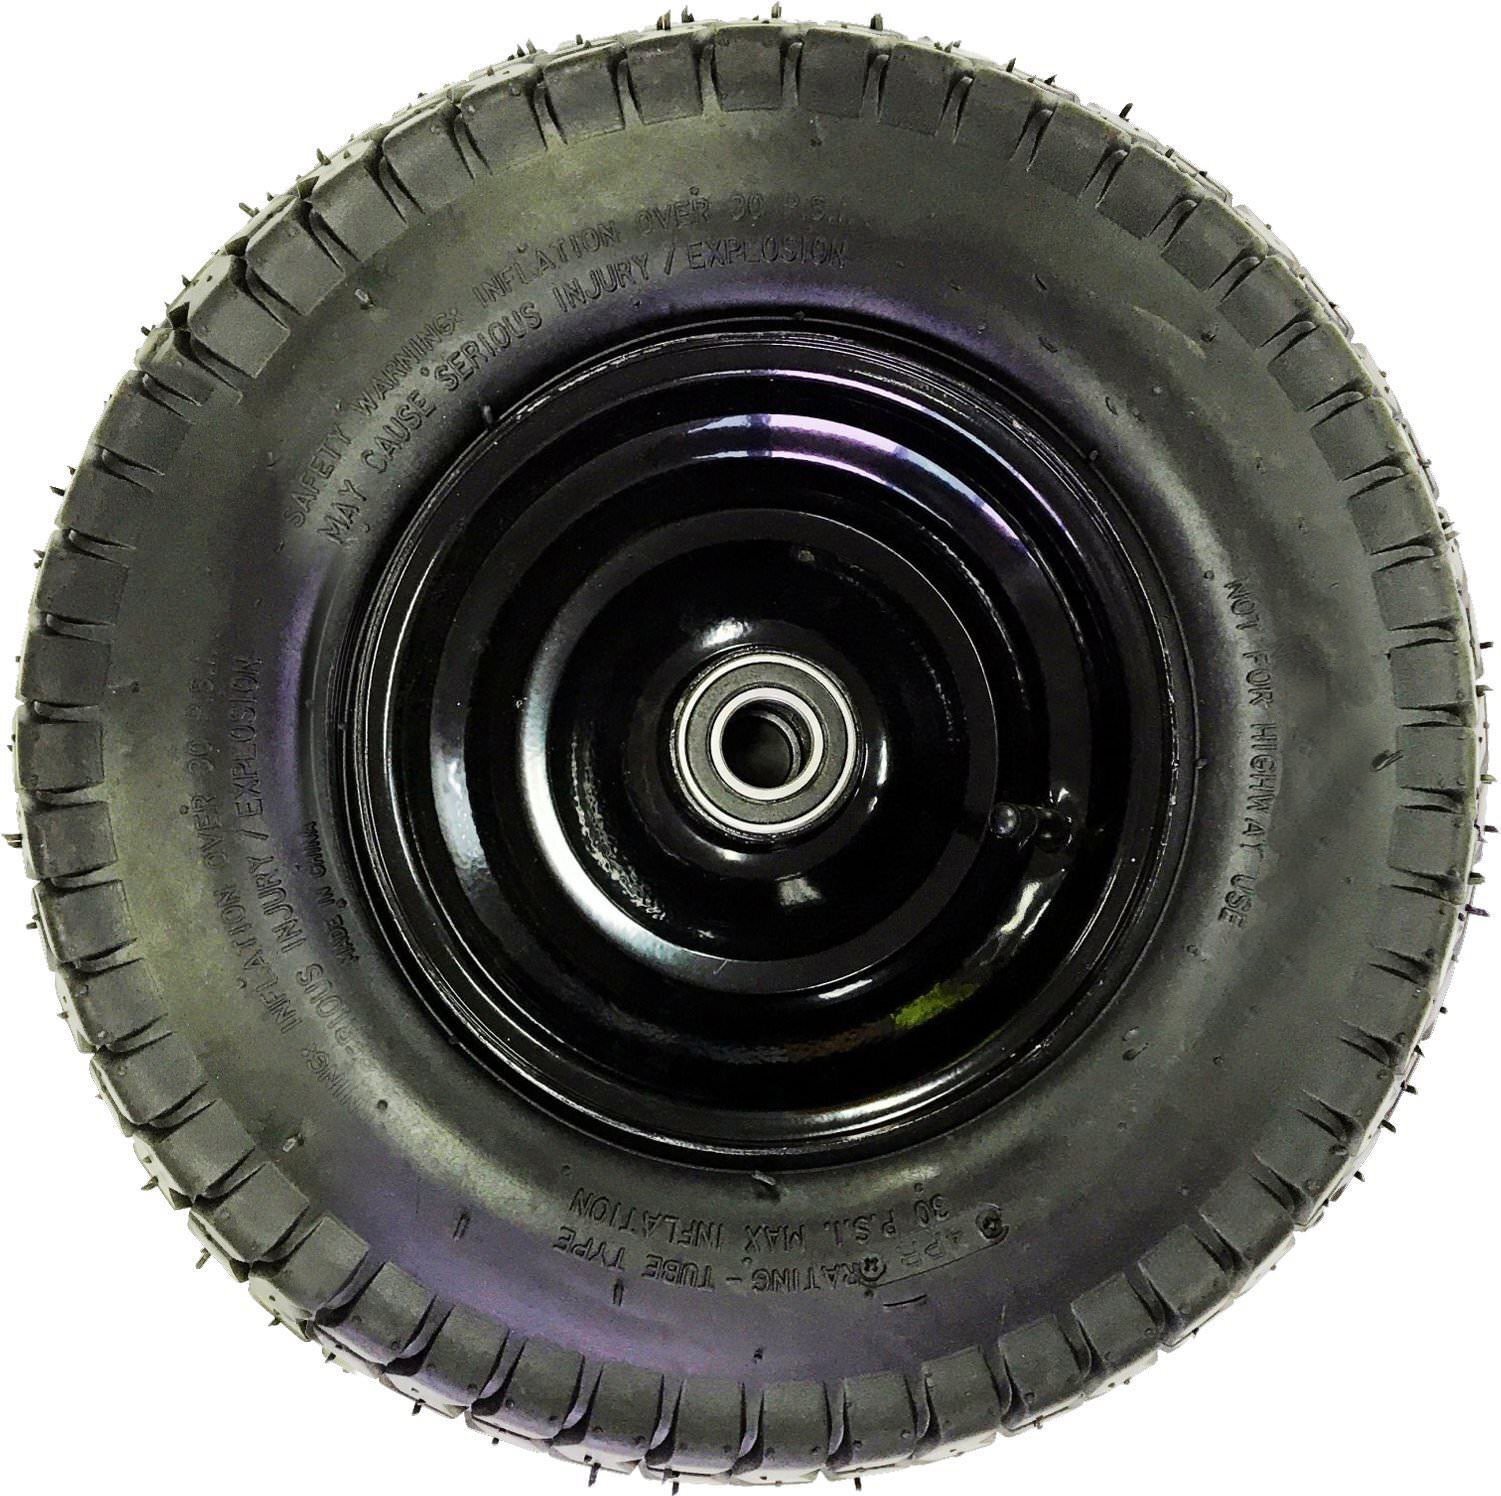 2 pieces 4.80/4.00-8, 400 mm wheelbarrow wheels wheel cart wheels tires